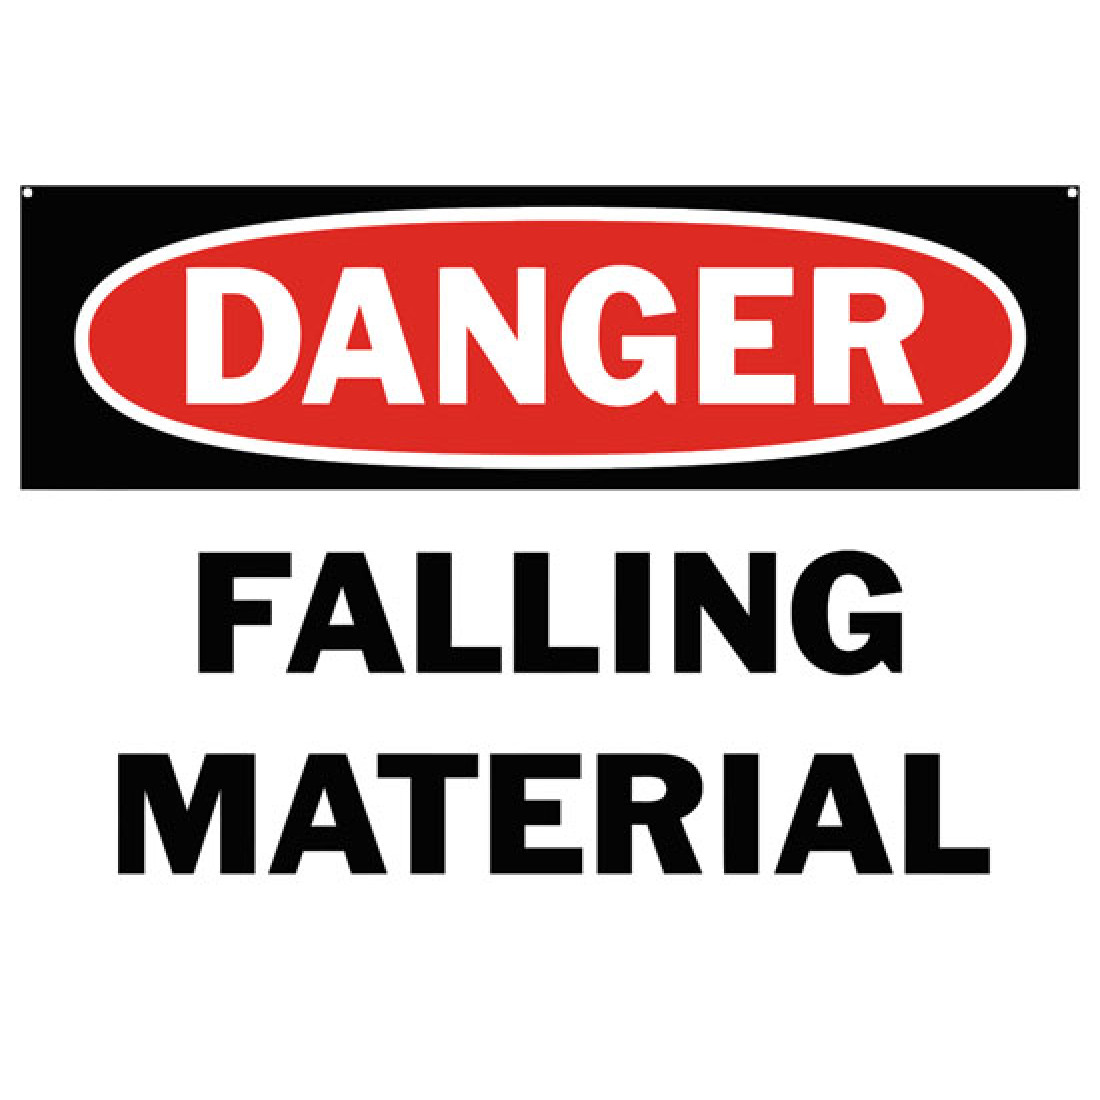 Falling For Danger Ch 16 Danger Falling Material Safety Sign